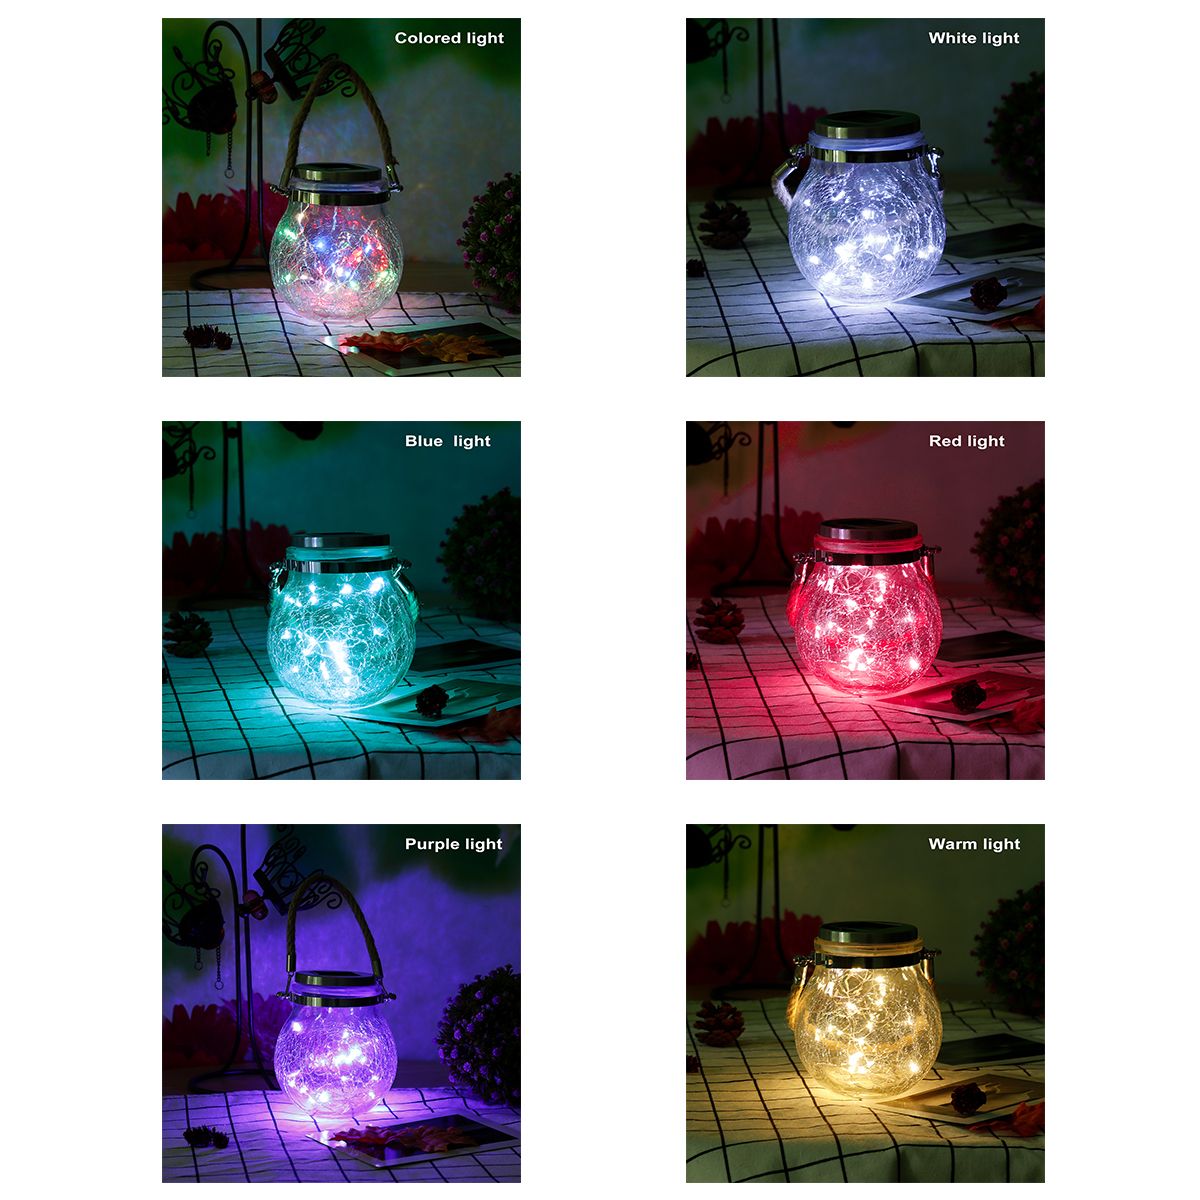 Hanging-Solar-Powered-Crackle-Glass-Jar-Lamp-Lantern-String-Fairy-Light-Romantic-Indoor-Outdoor-Deco-1618945